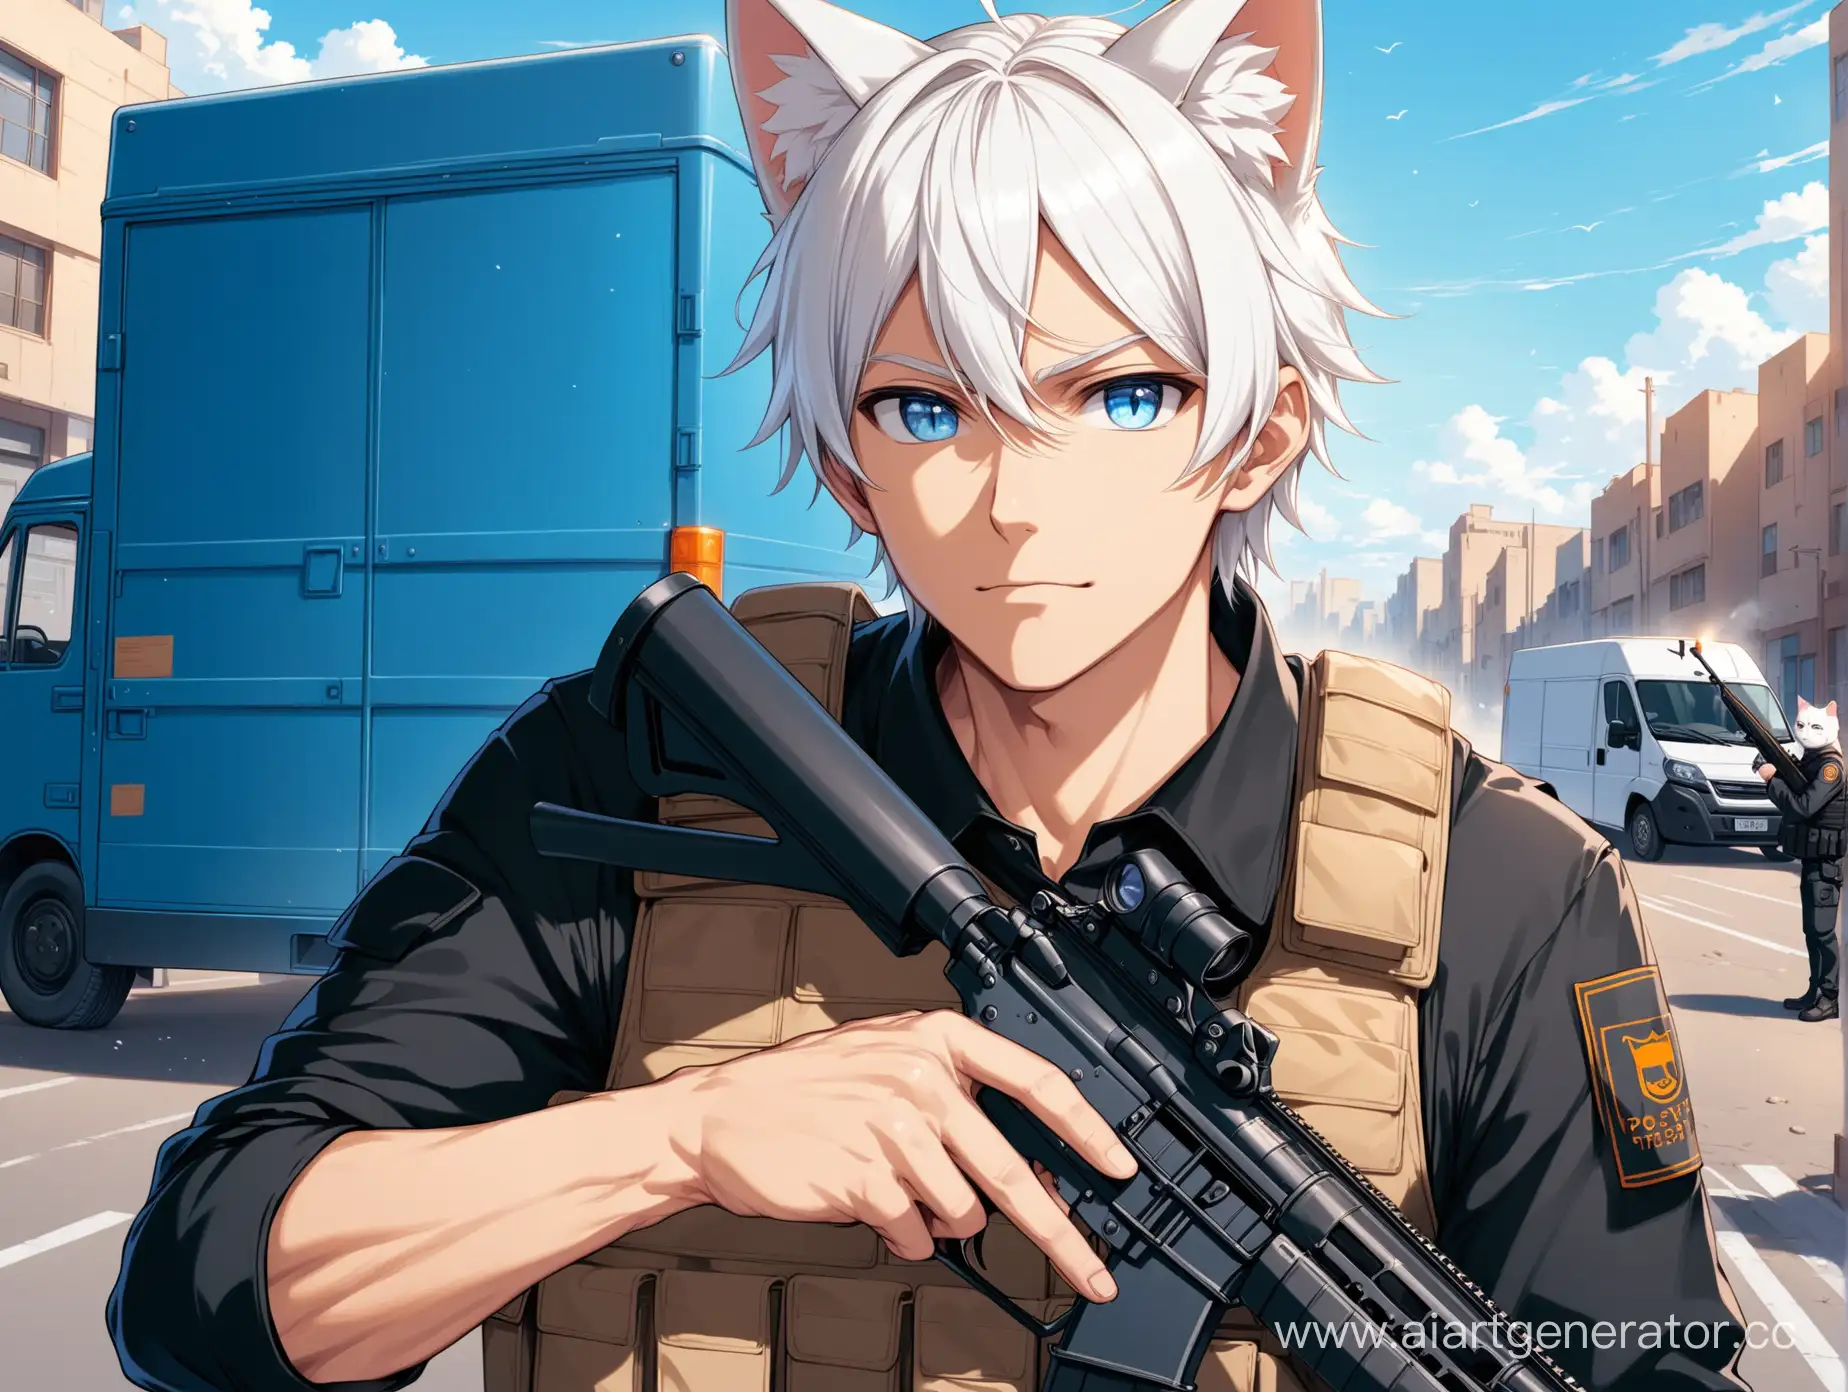 Silverhaired-Man-with-Cat-Ears-Holding-Rifle-in-Bulletproof-Vest-near-Postal-Van